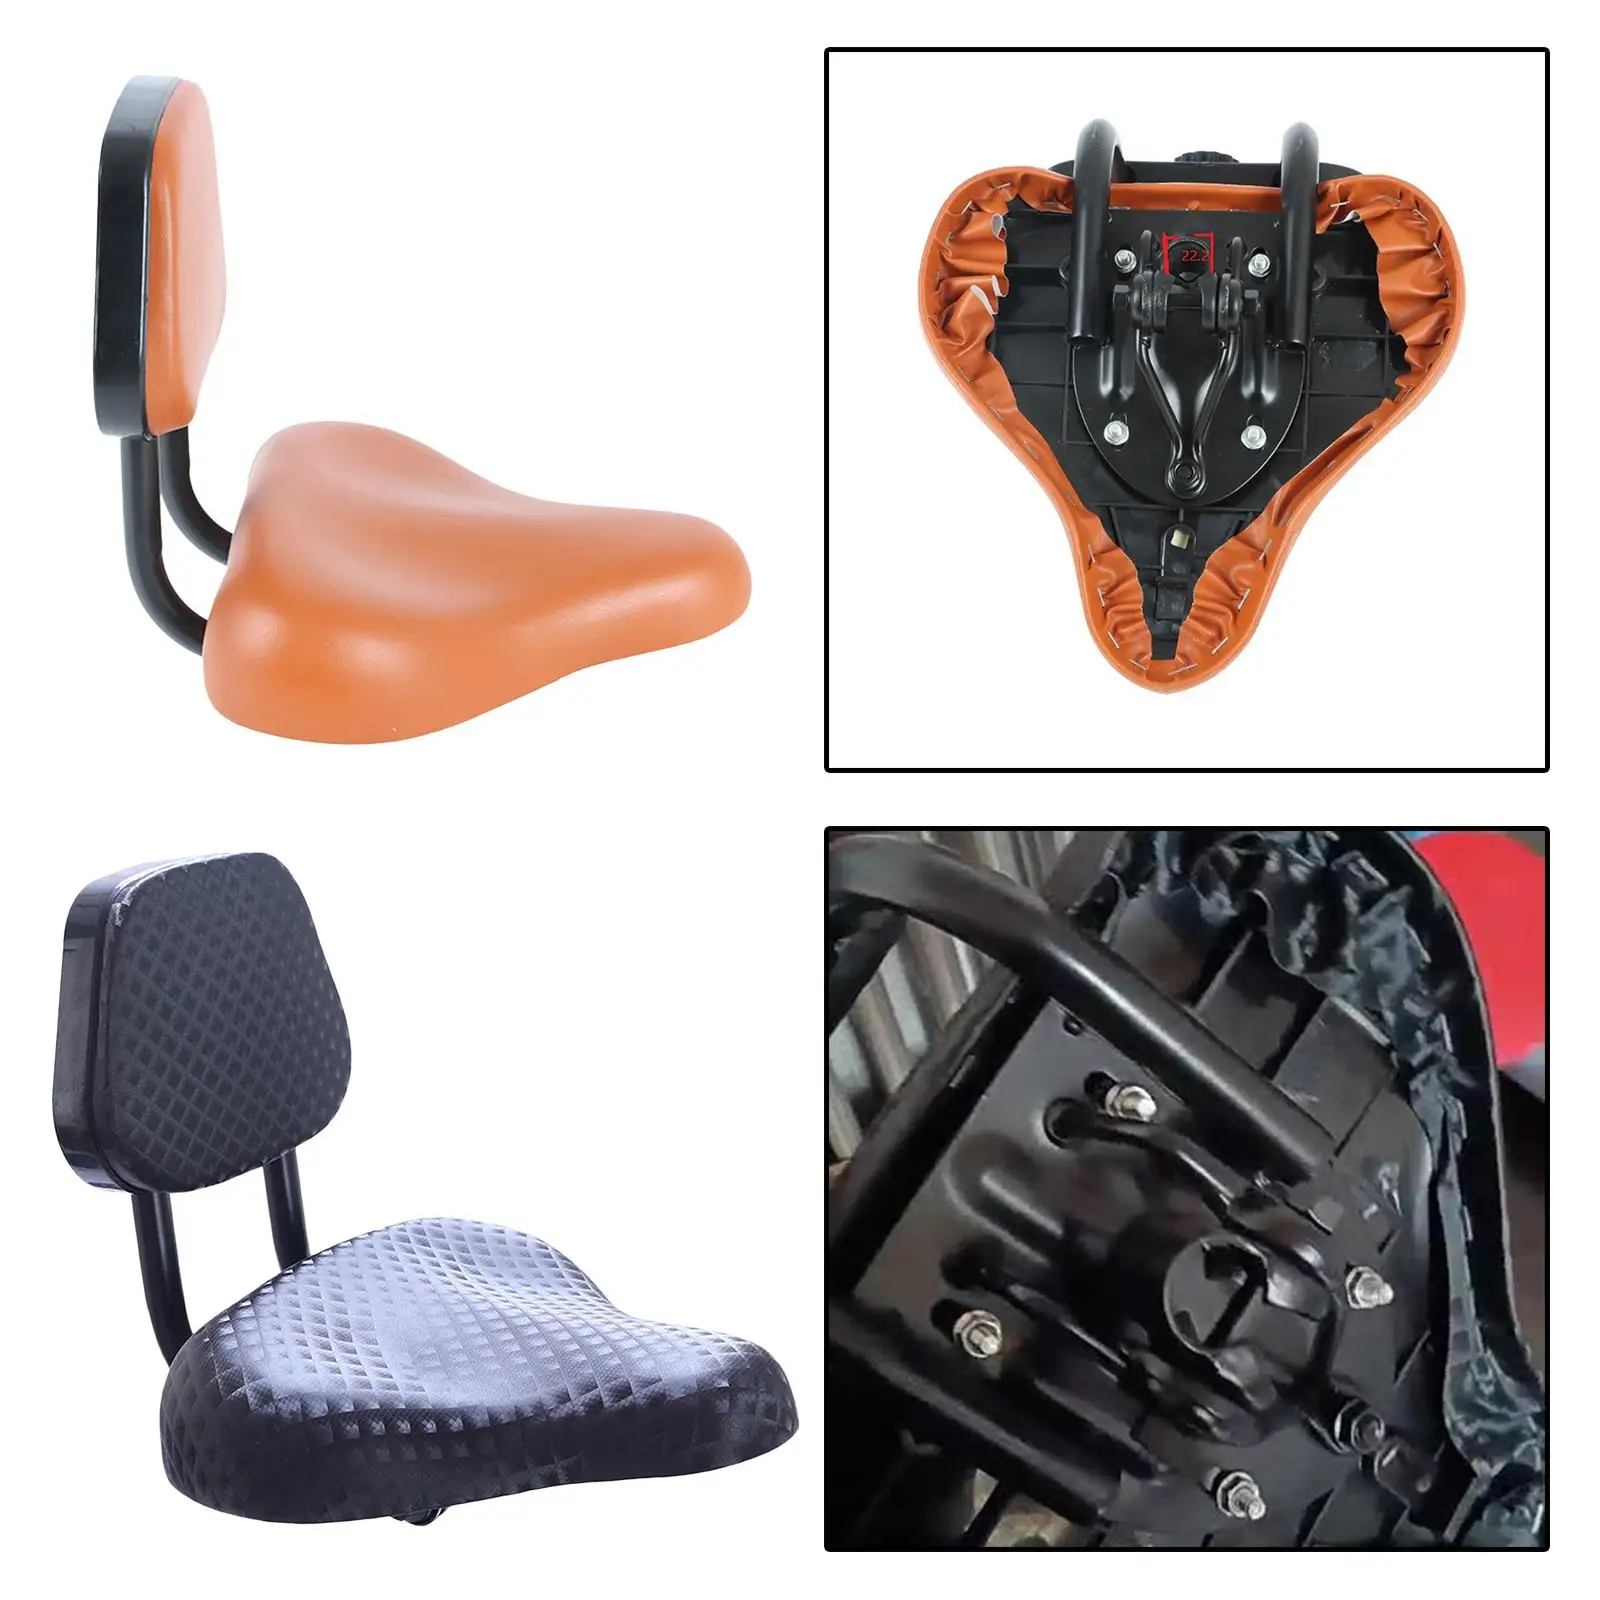 Breathable saddle seat with backrest safety back